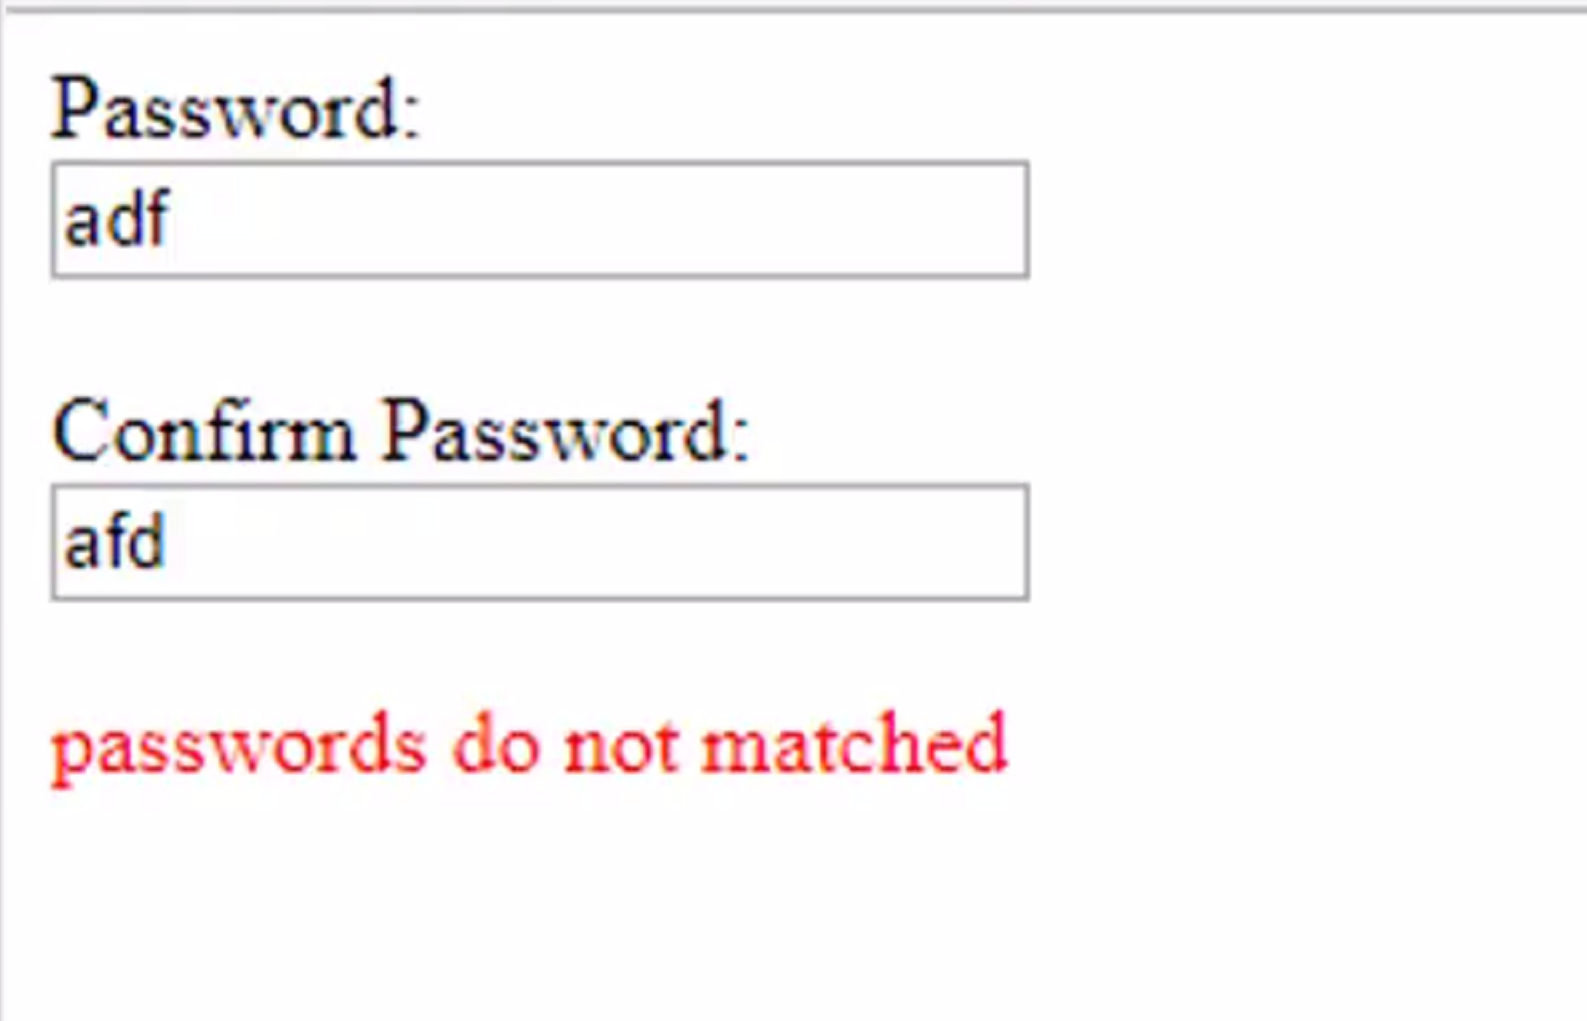 Key to confirm перевод. Show password button.